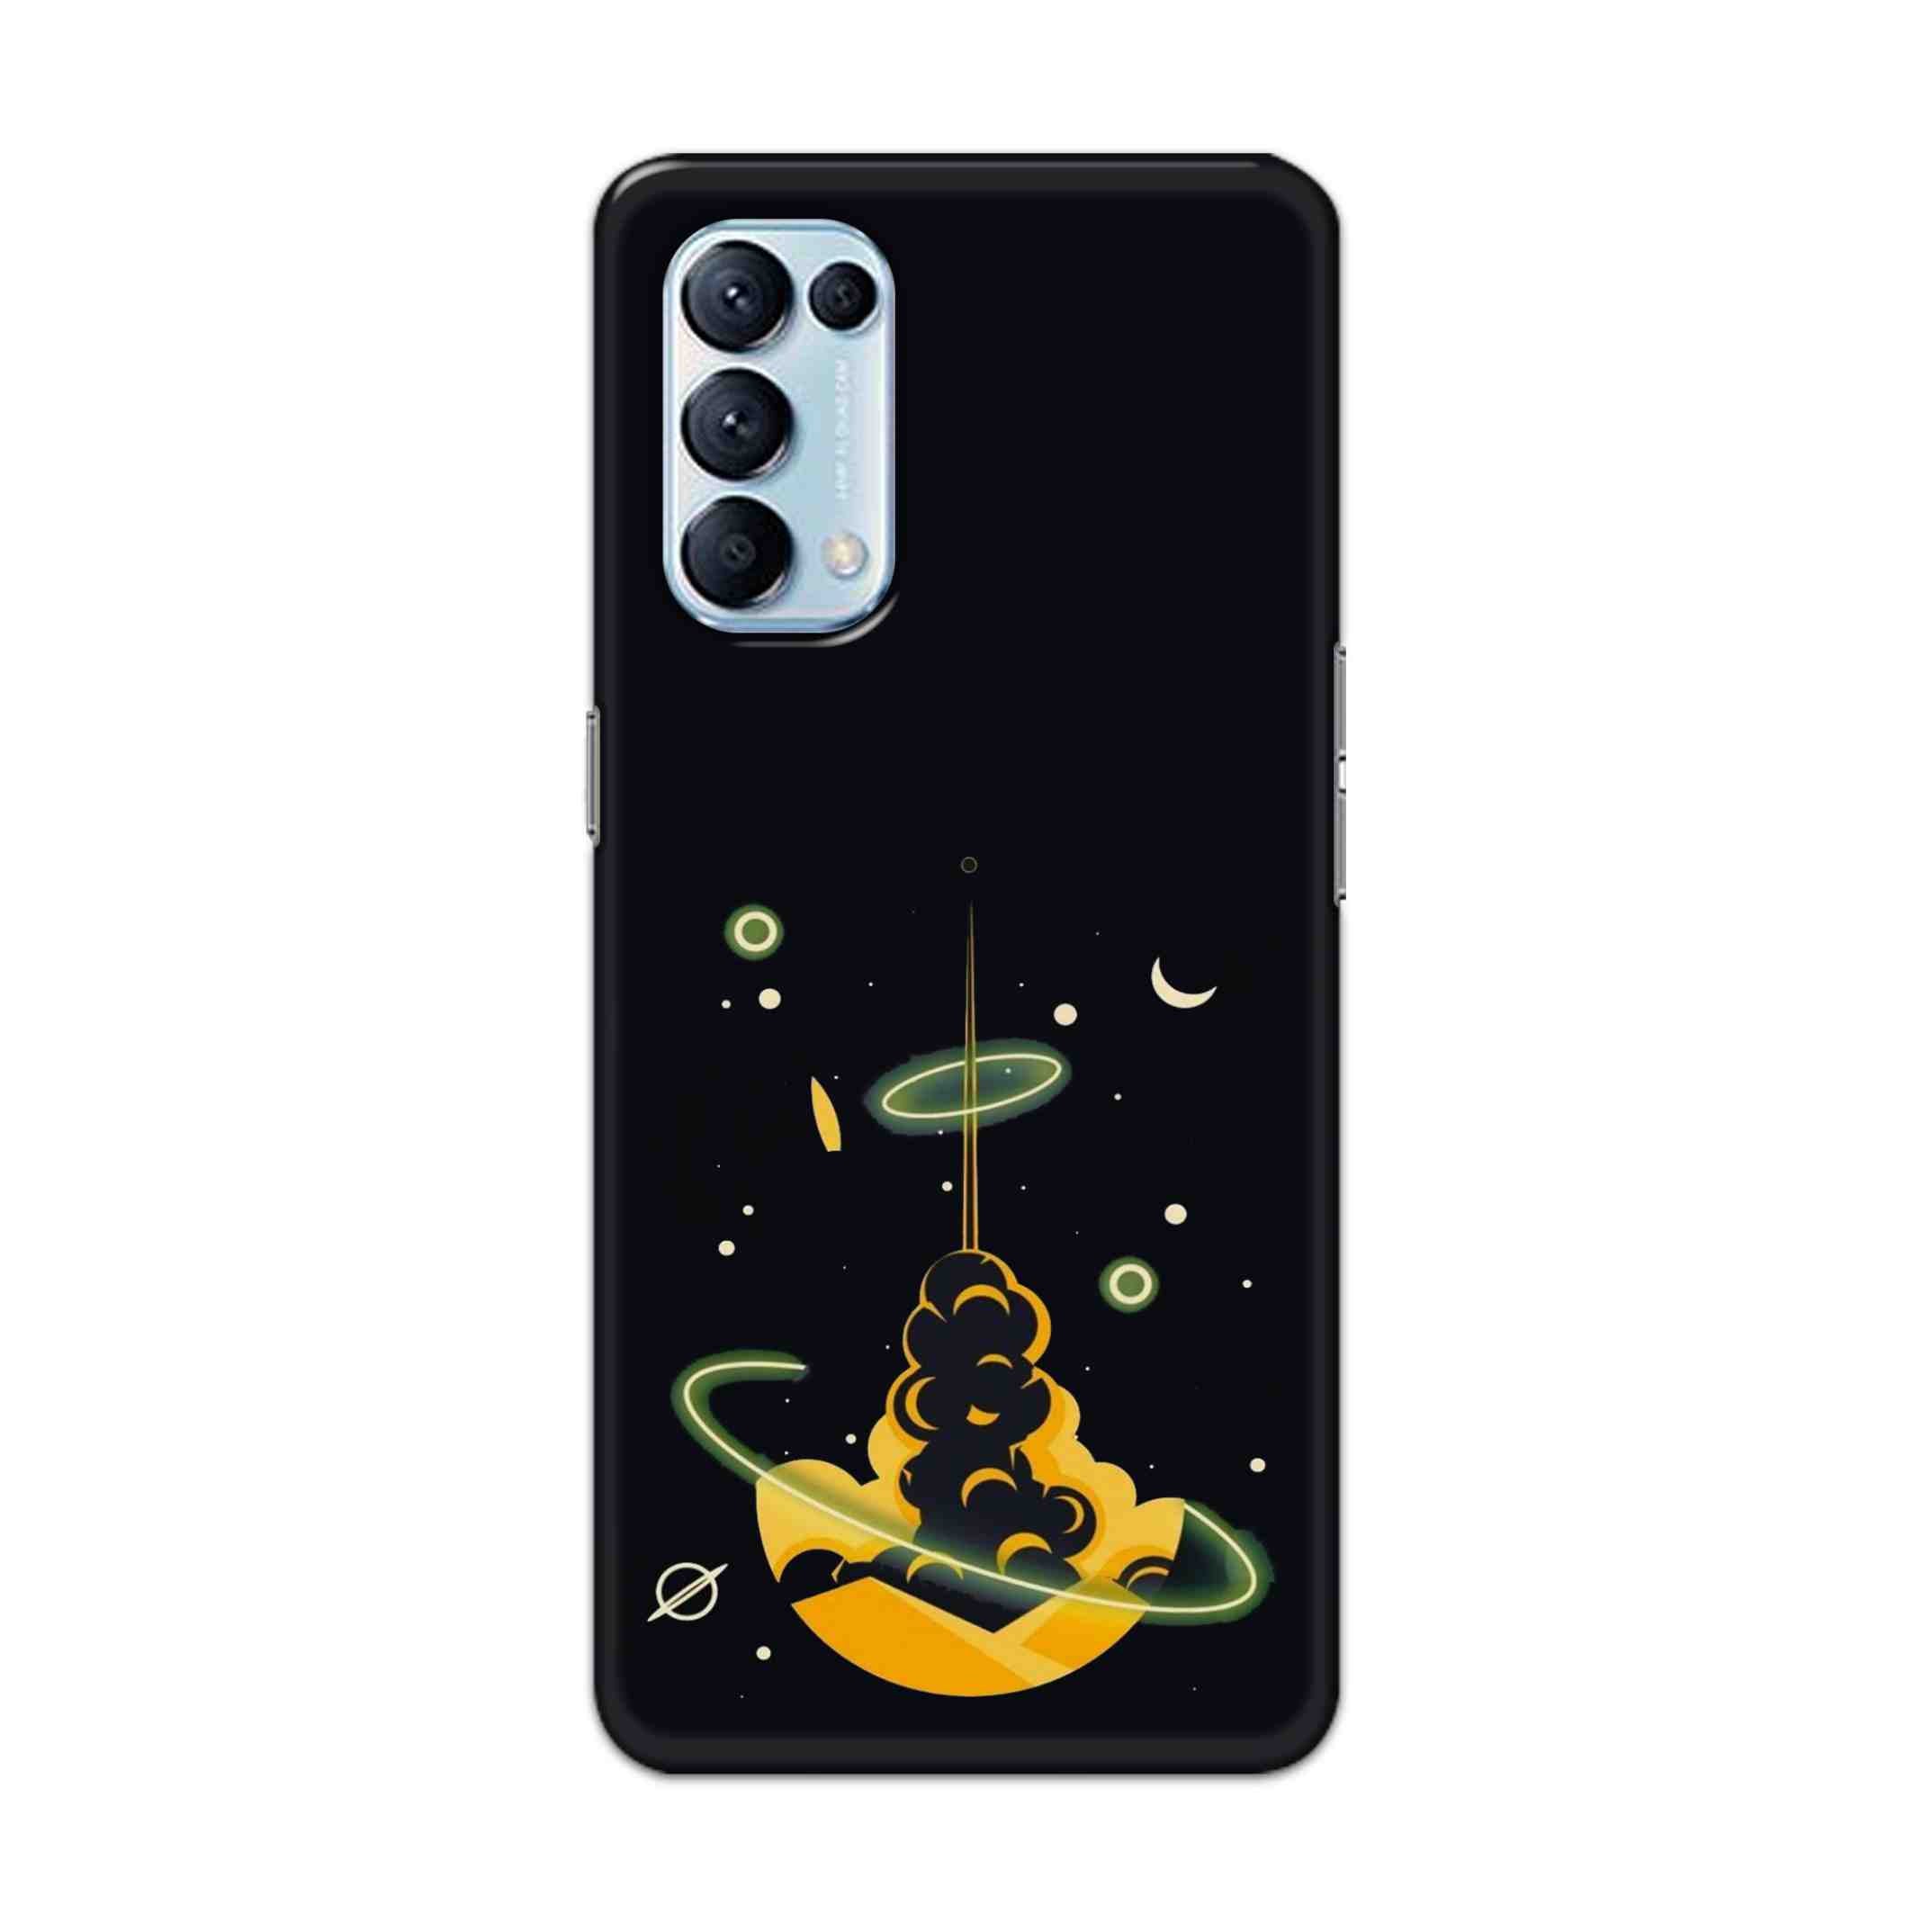 Buy Moon Hard Back Mobile Phone Case Cover For Oppo Reno 5 Pro 5G Online